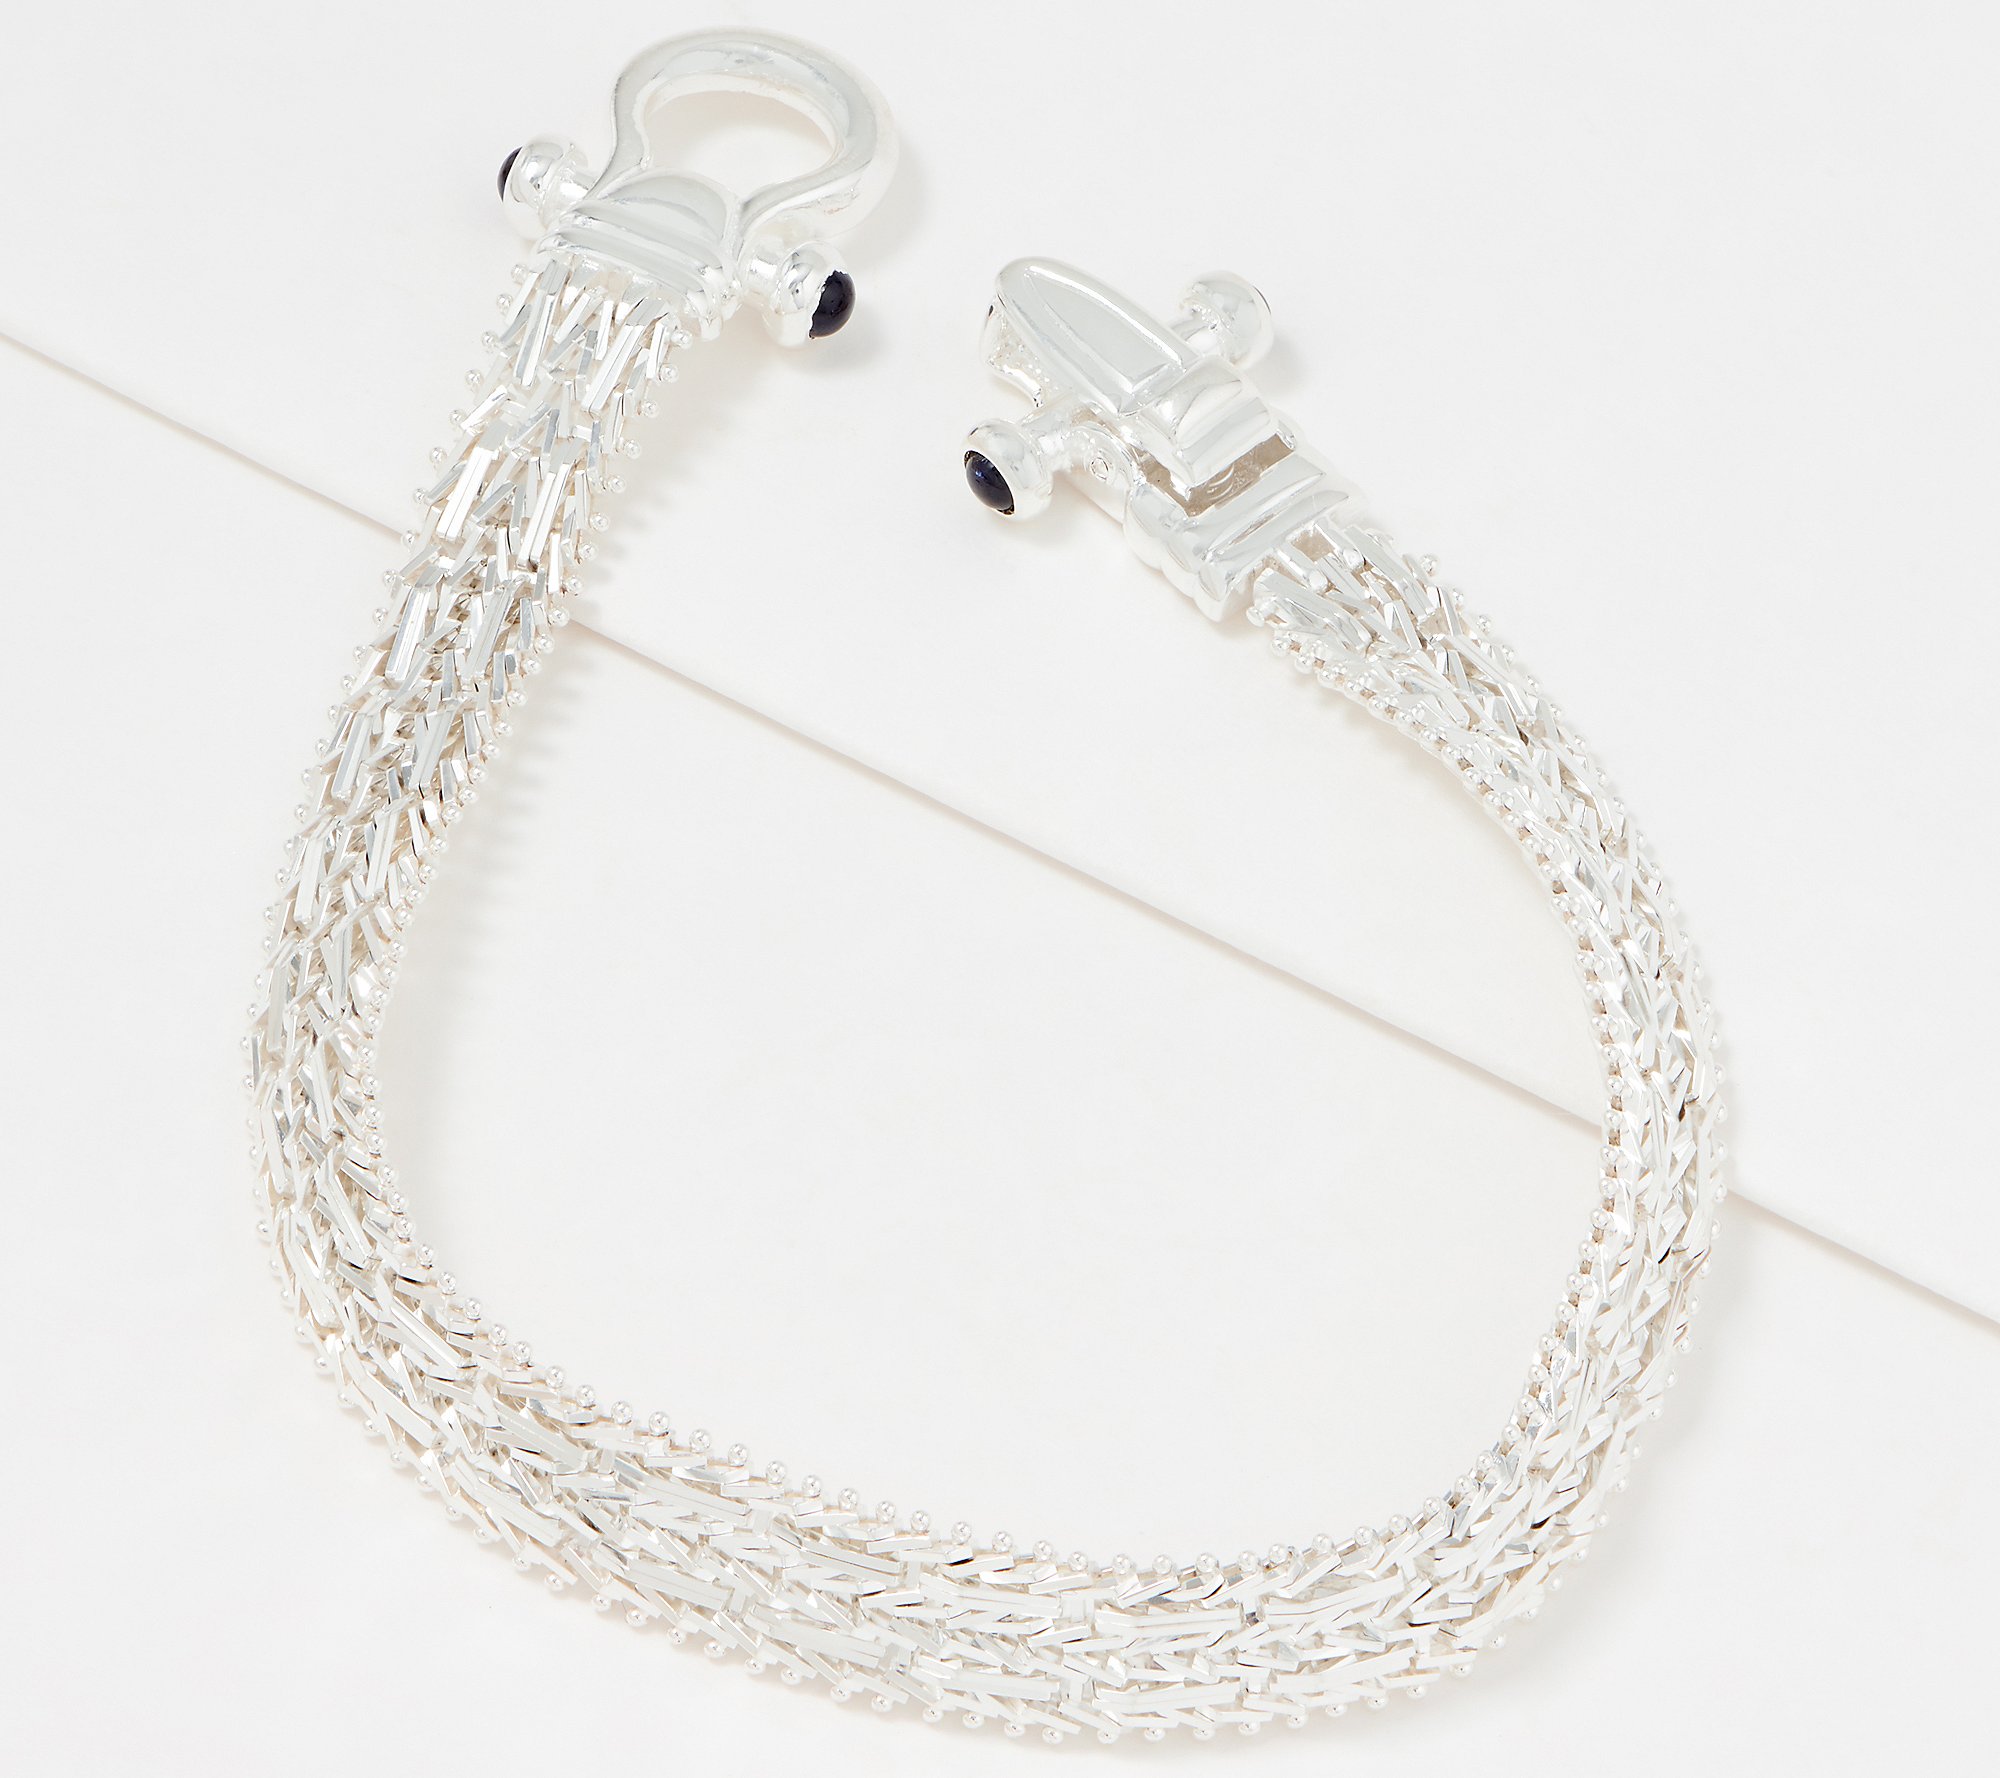 Imperial Elite Opal Polki Pave Diamond 925 Sterling Silver Victorian Bracelet Love Joy 2021 Special Gift For Women Girls Sale Discount Off